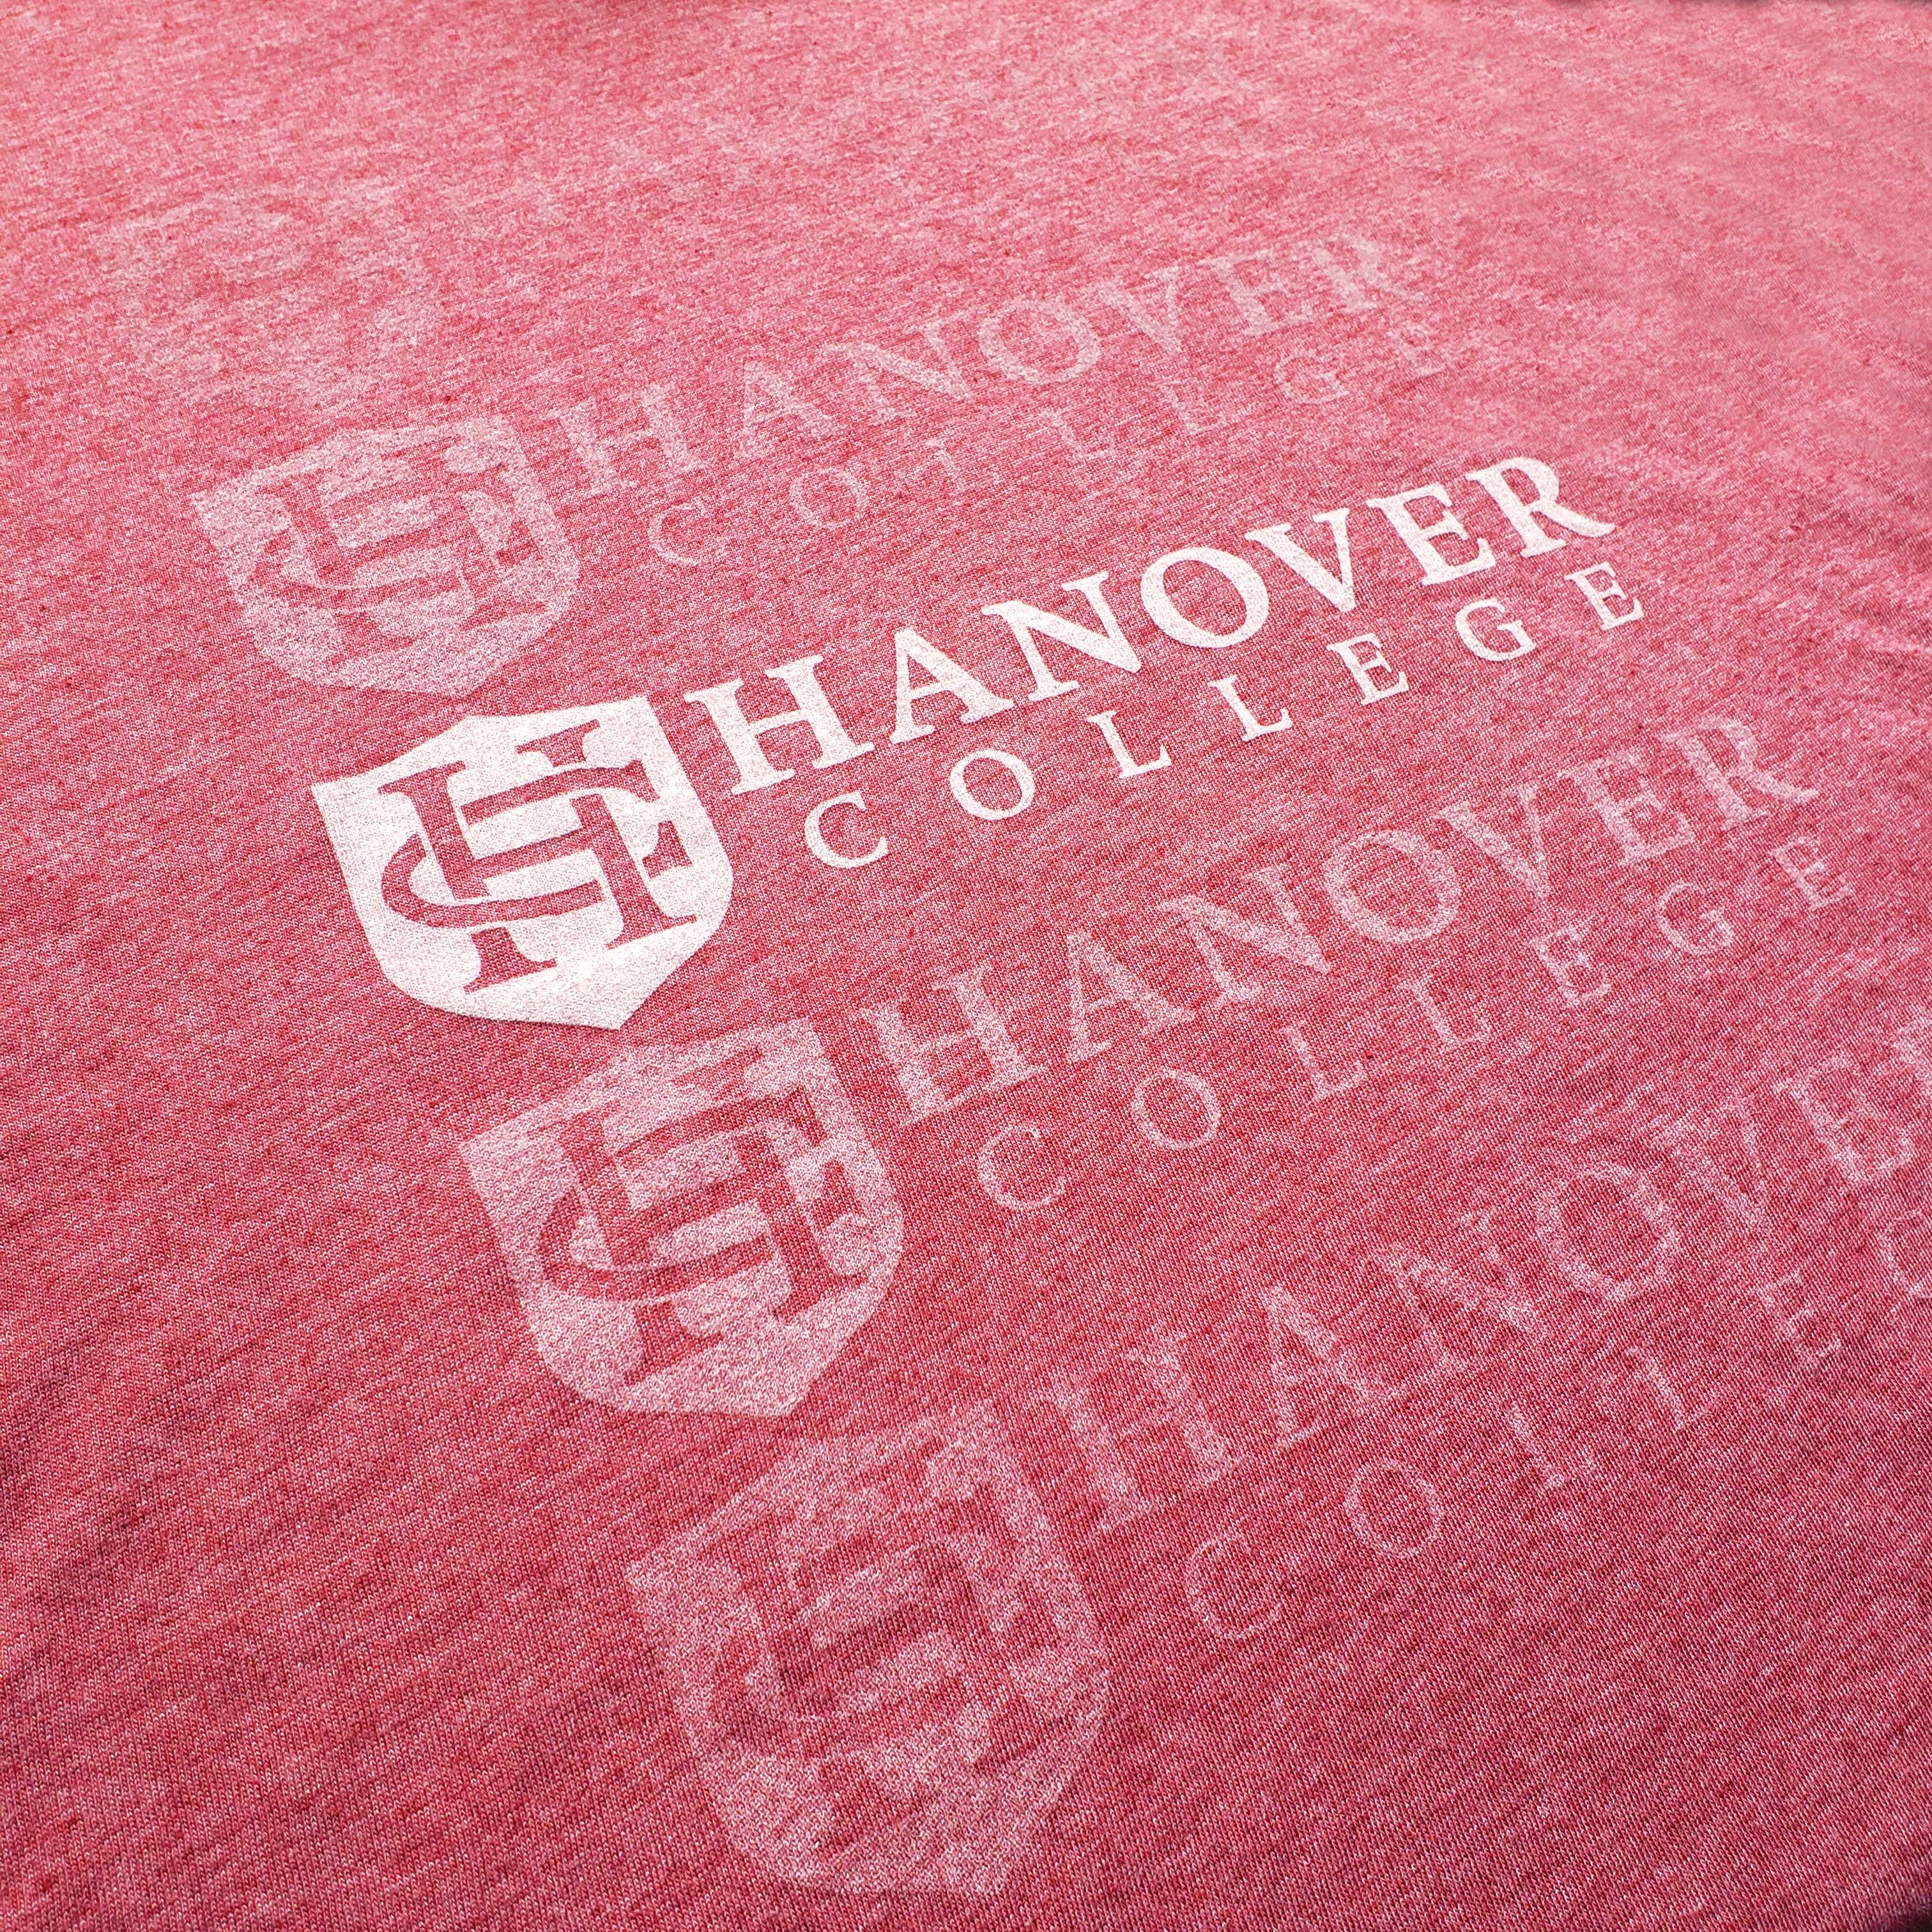 Hanover College Tshirt.